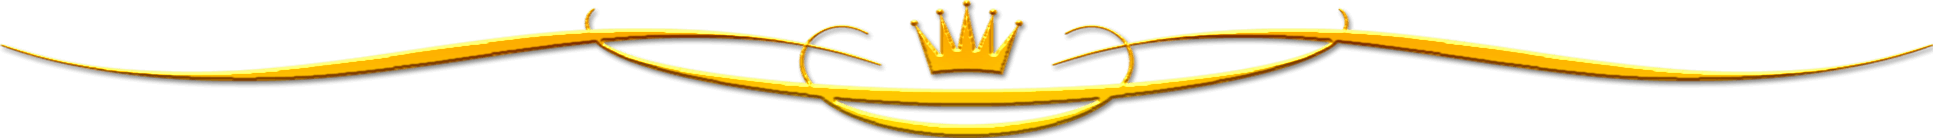 crown-line